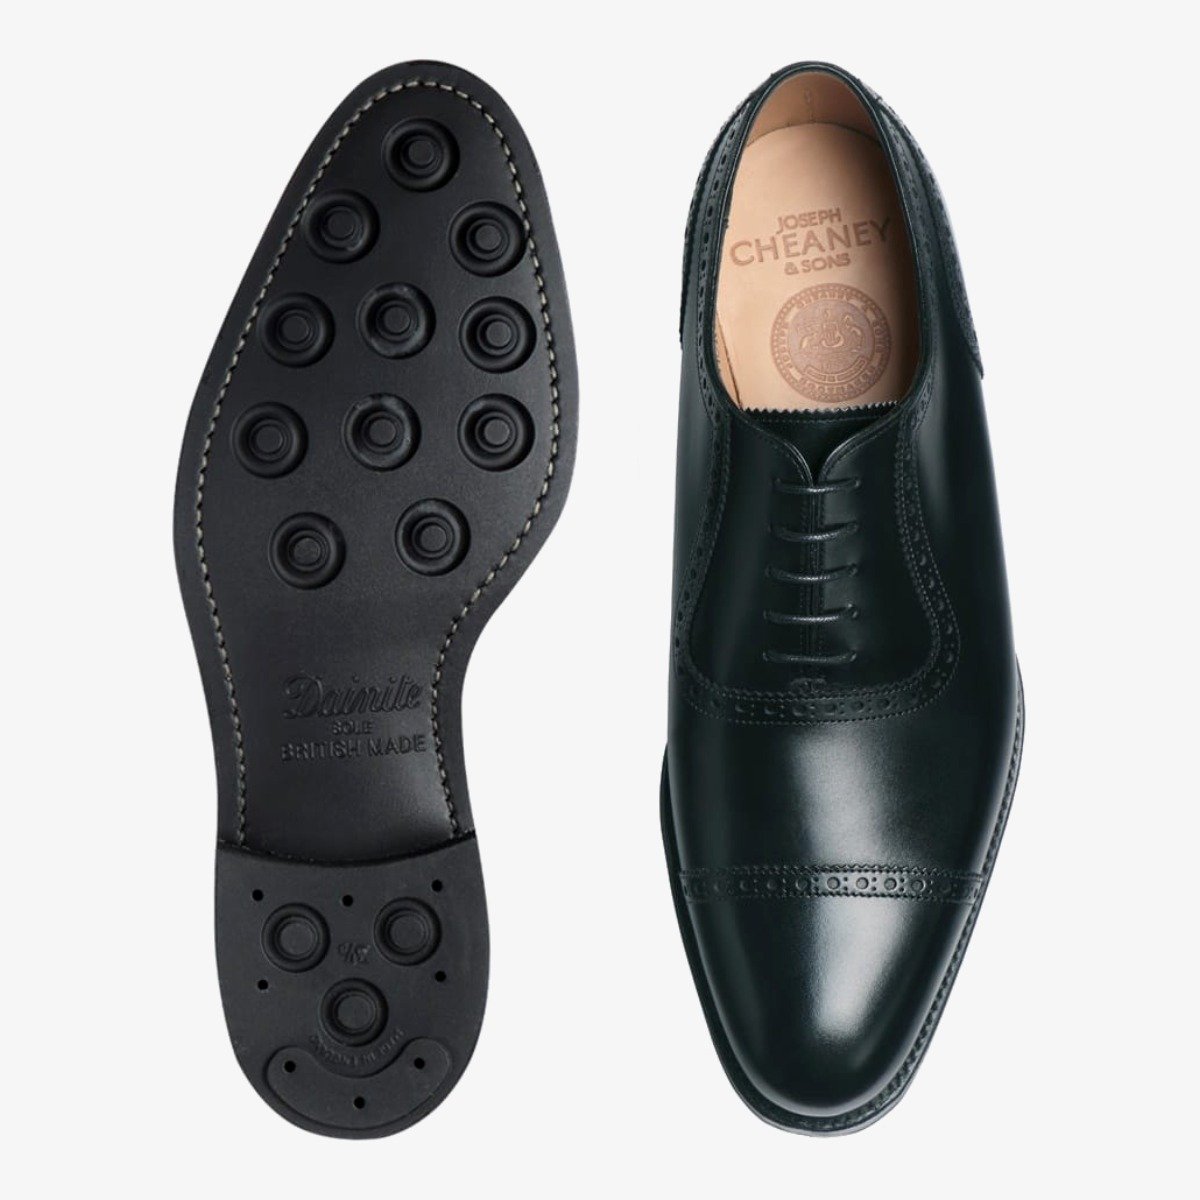 Cheaney Fenchurch black brogue men's oxford shoes - rubber soles